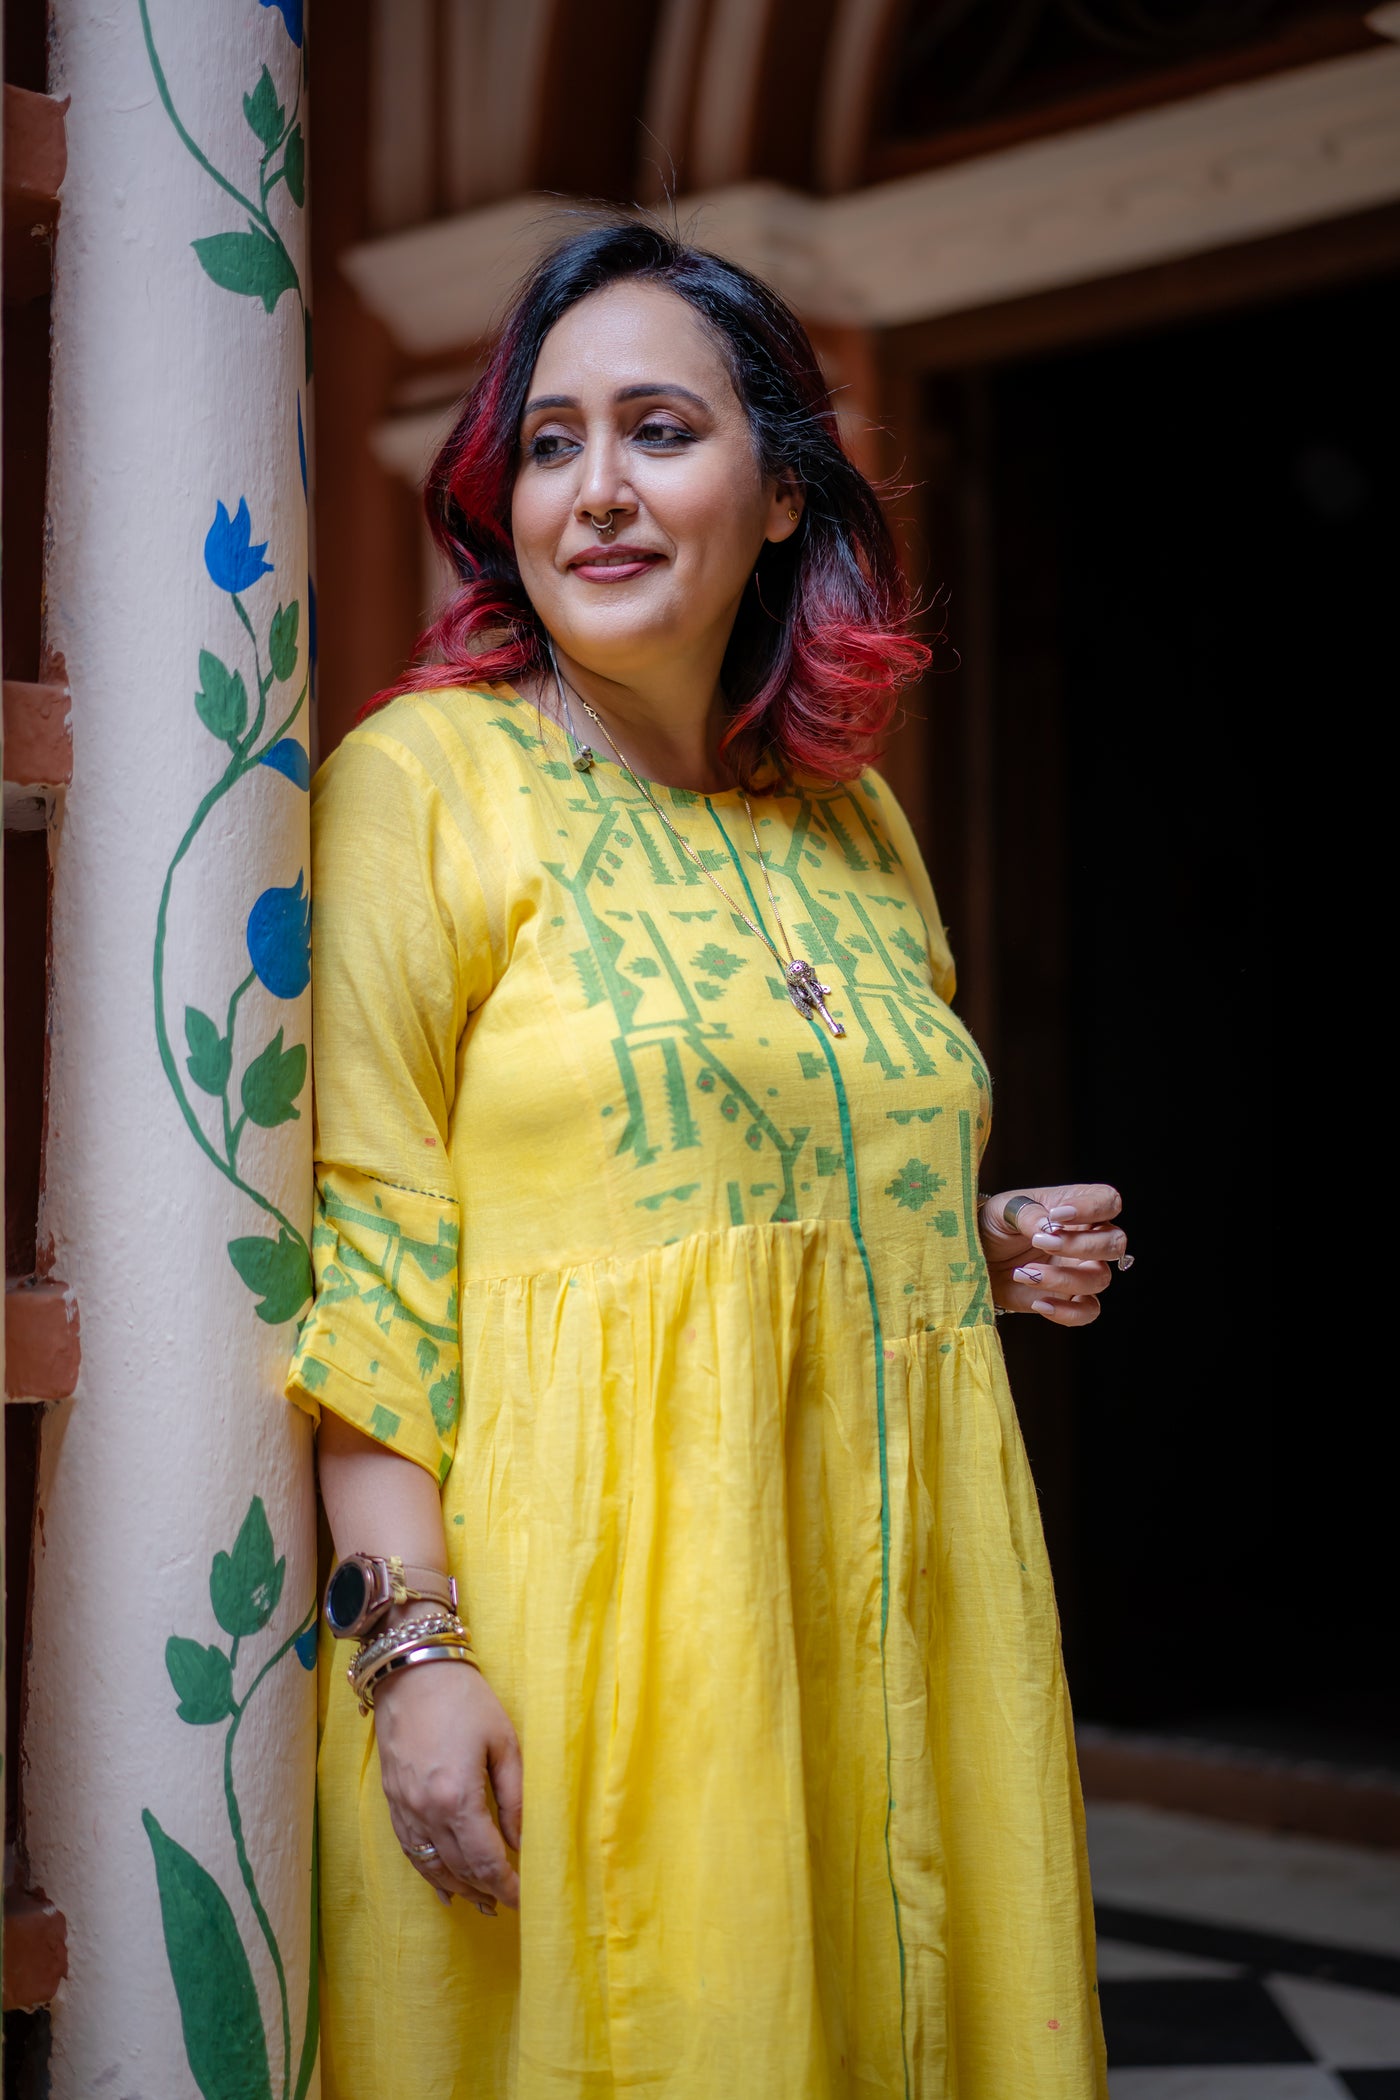 Yellow Jamdani Dress with patchwork